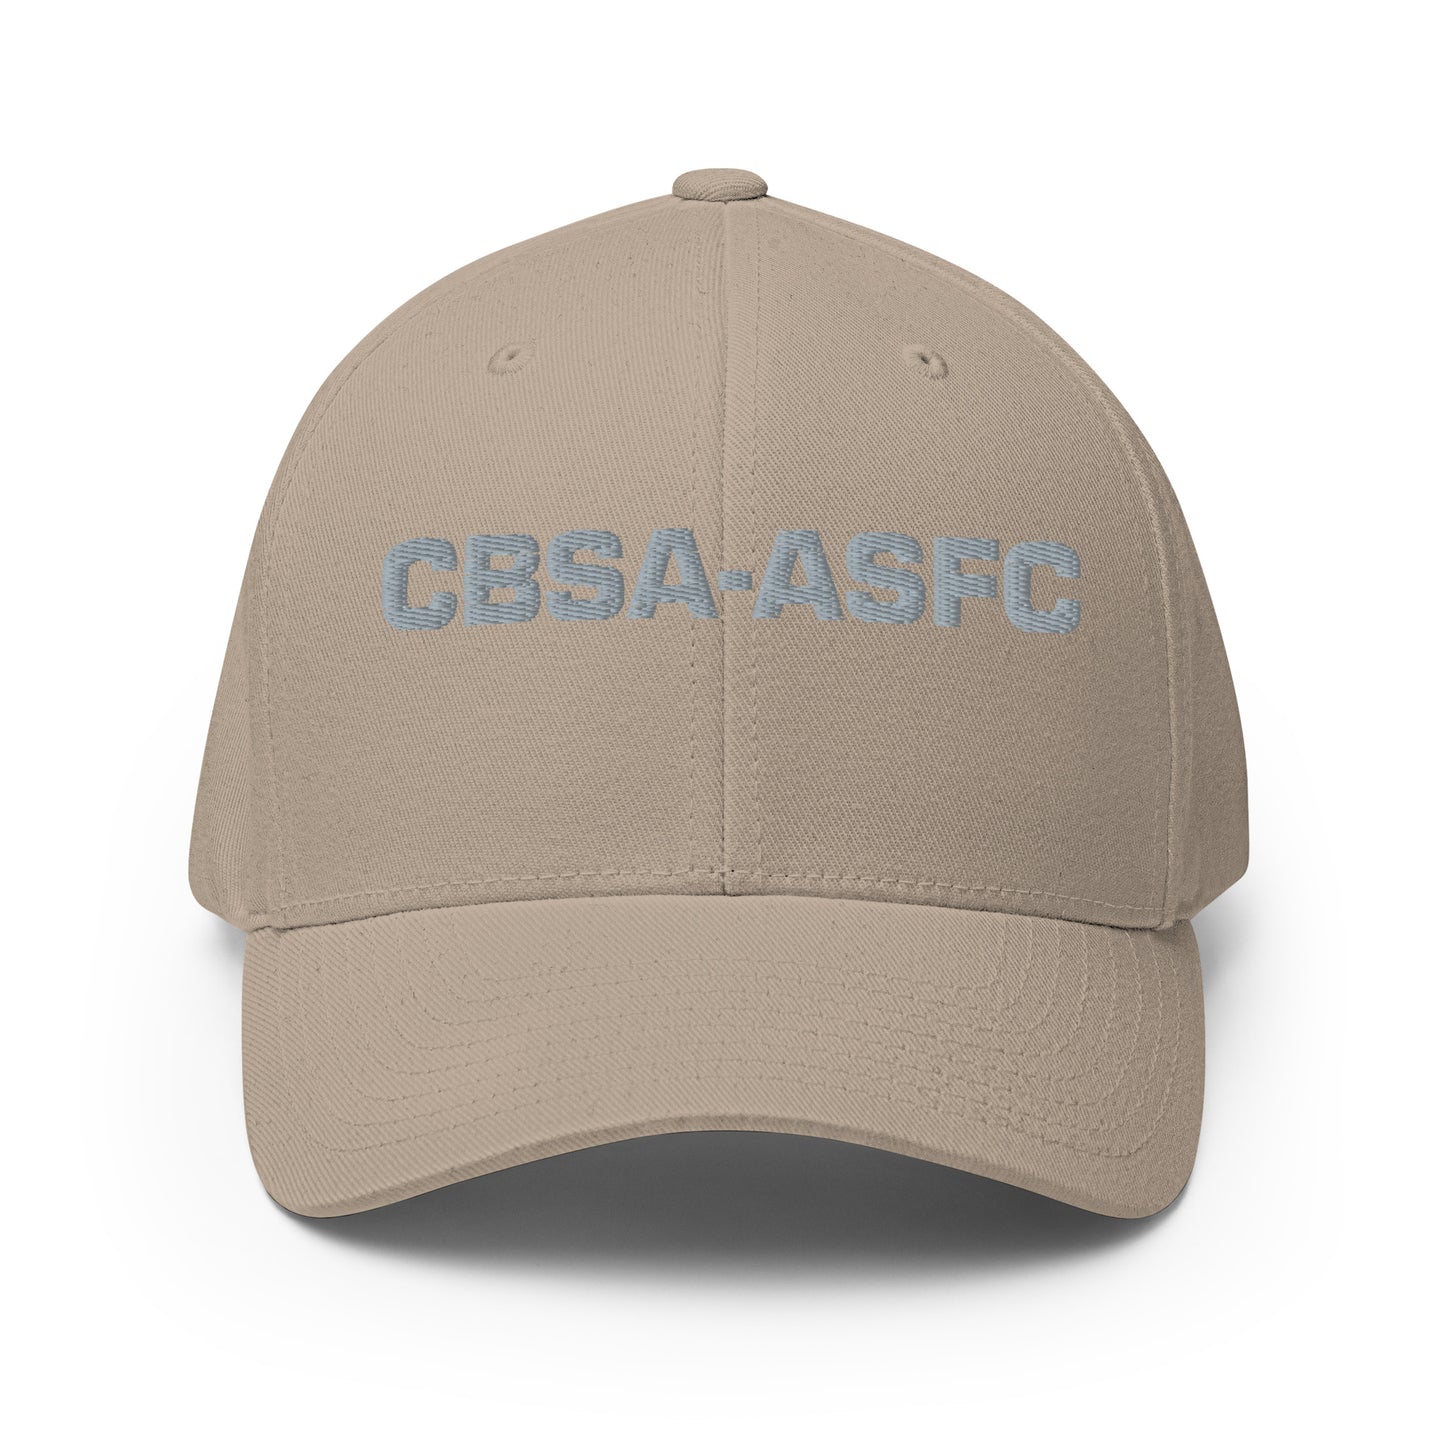 CBSA-ASFC Subdued Duty Flextfit Ballcap